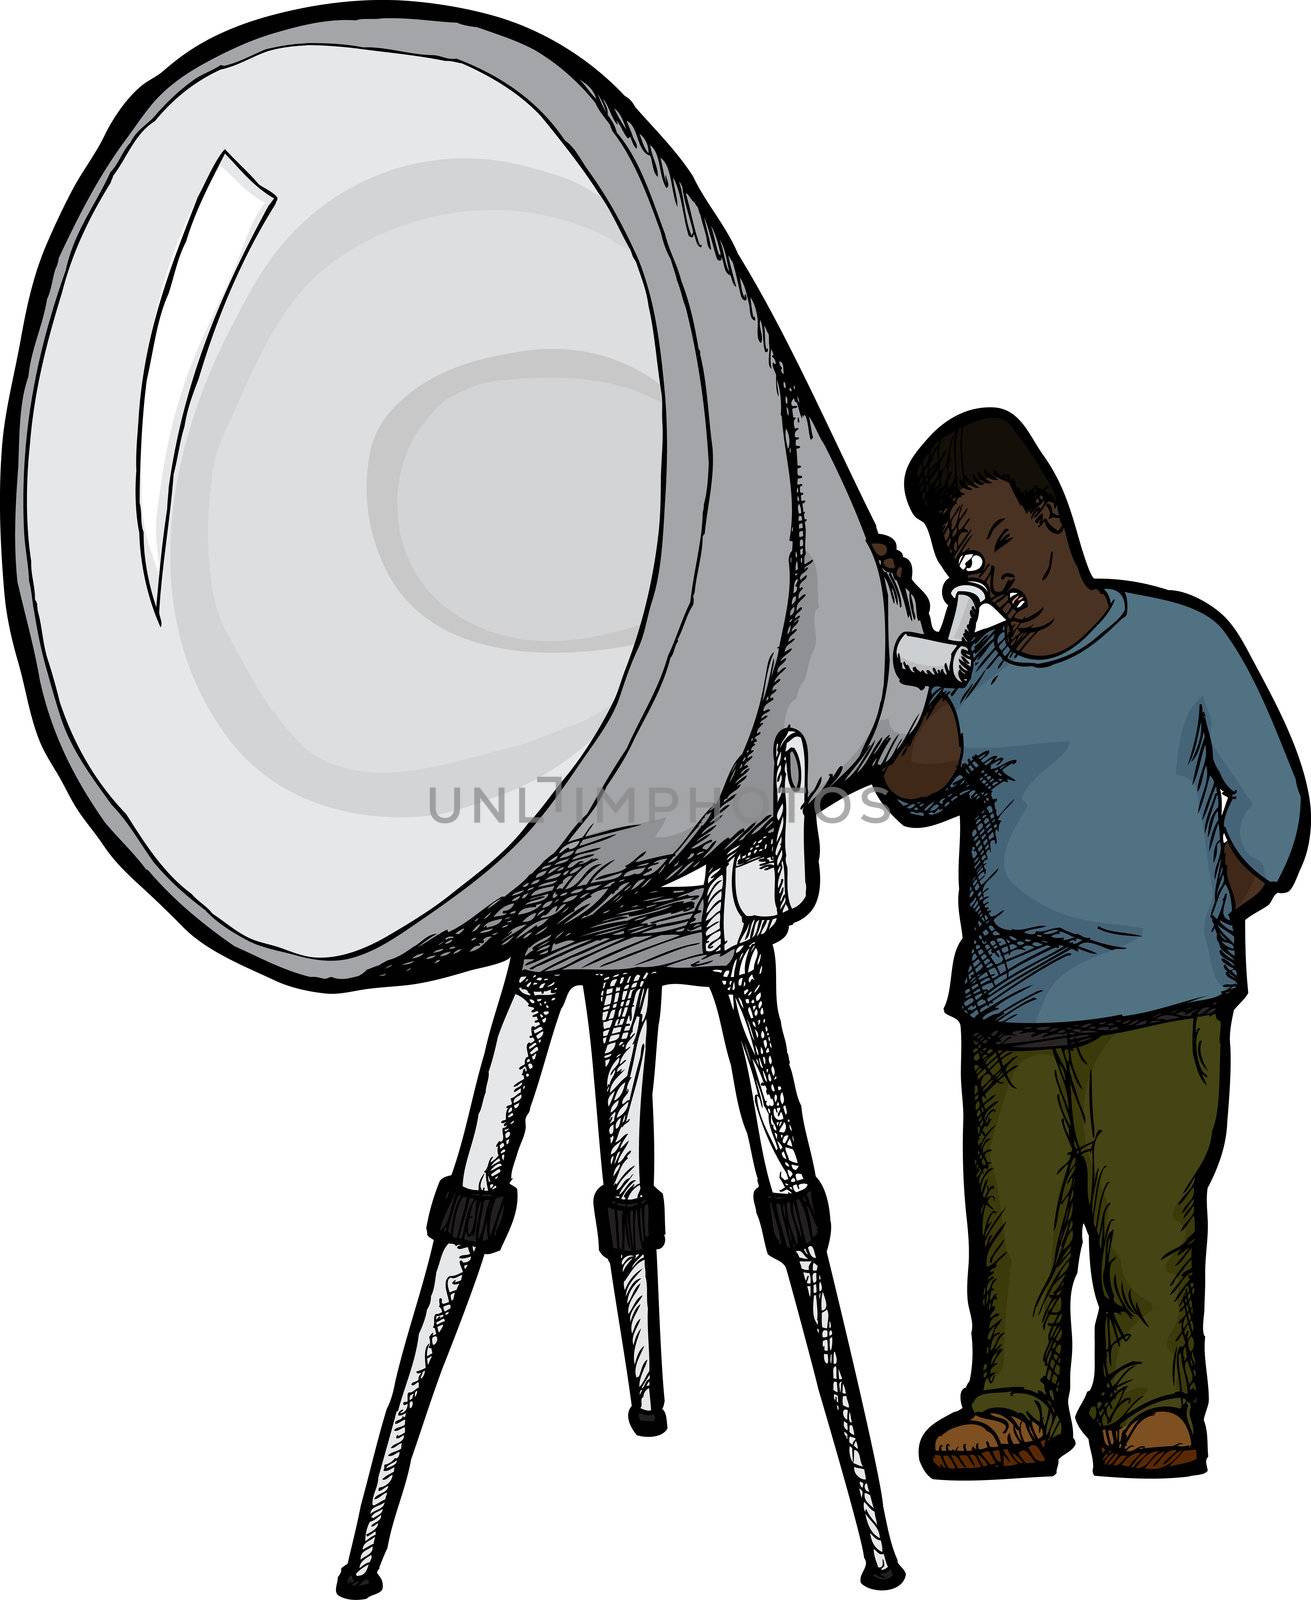 Surprised Black man looks through large telescope